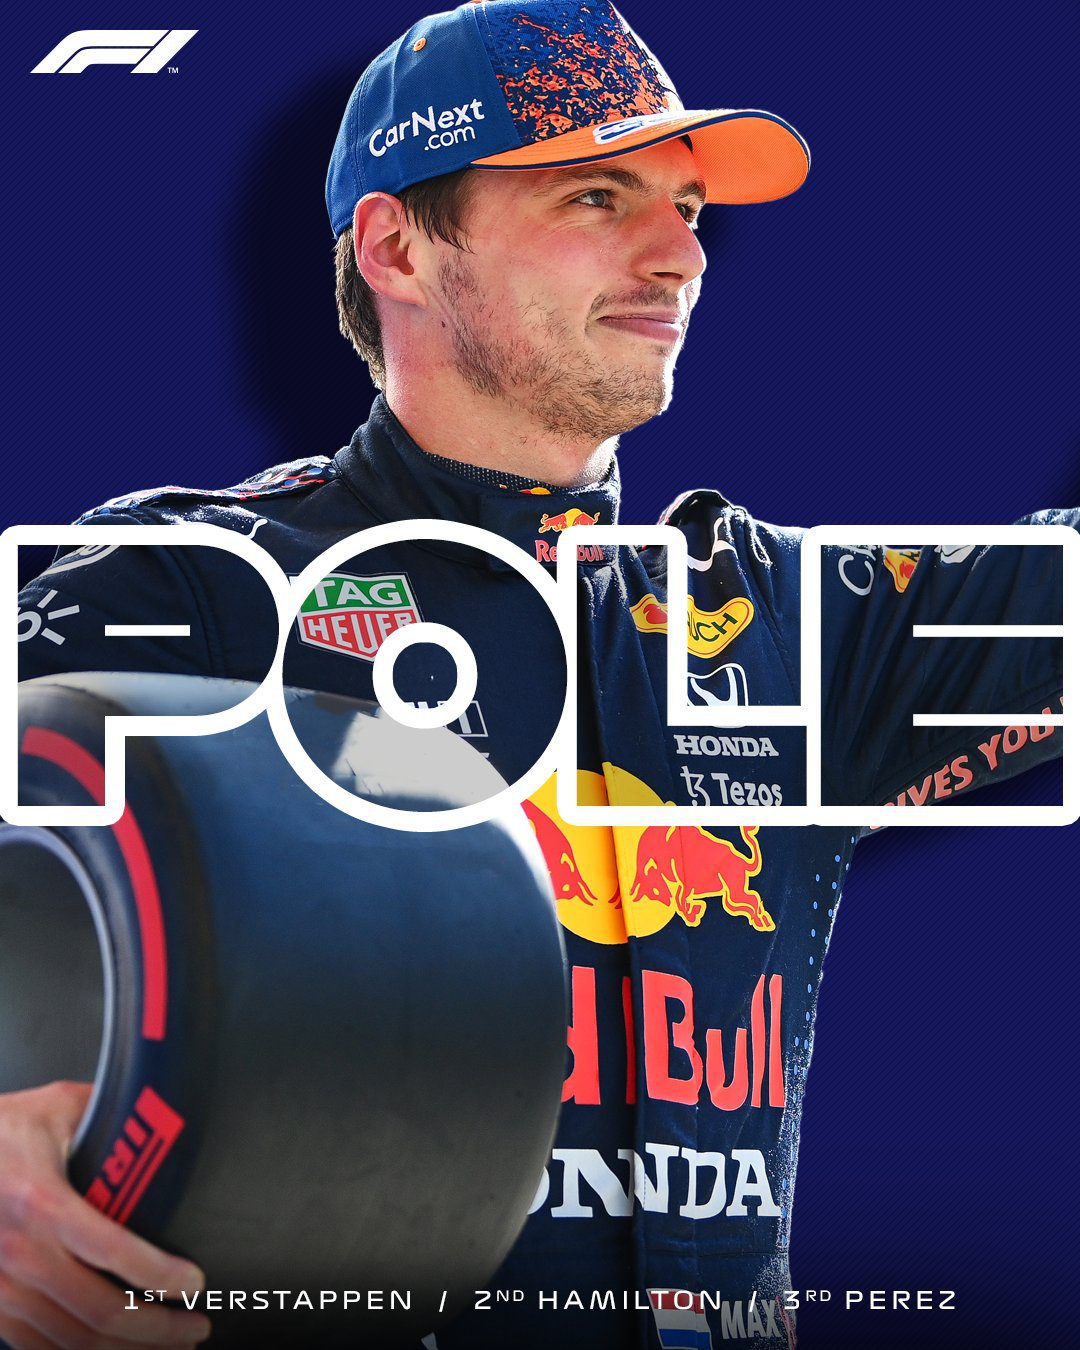 GP Αμερικής: Στην pole ο Verstappen!